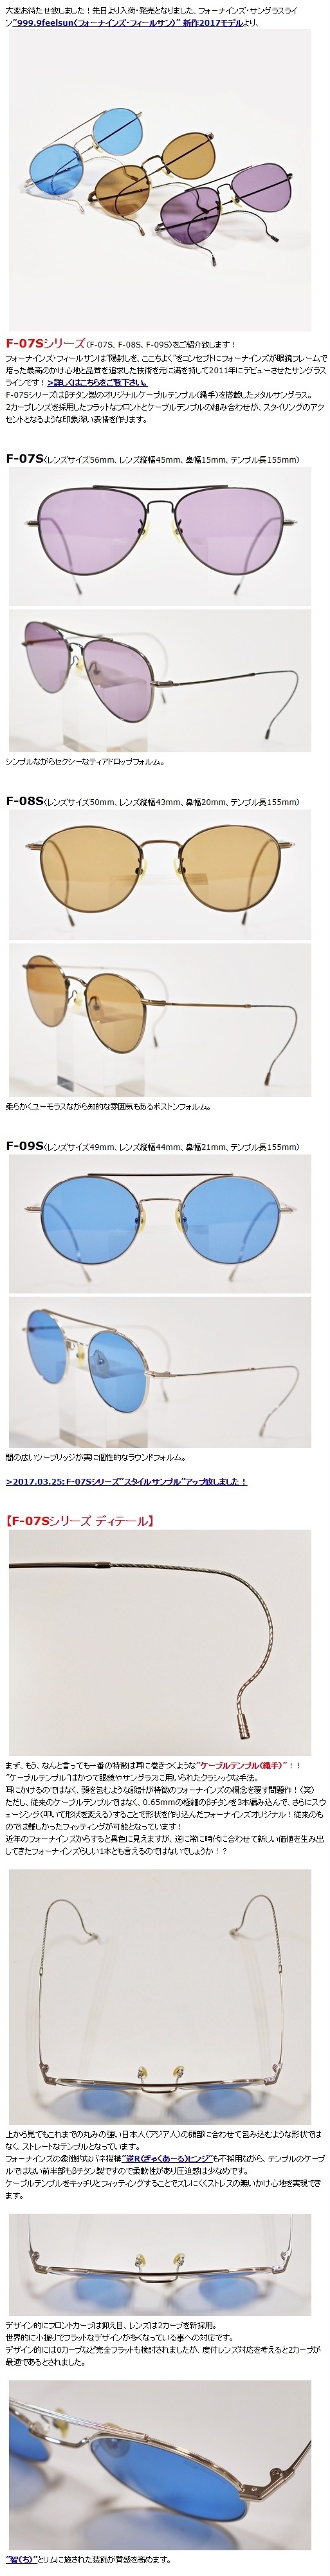 999.9feelsun”F-07Sシリーズ” | 999.9 selected by HAYASHI-MEGANE BLOG(2)